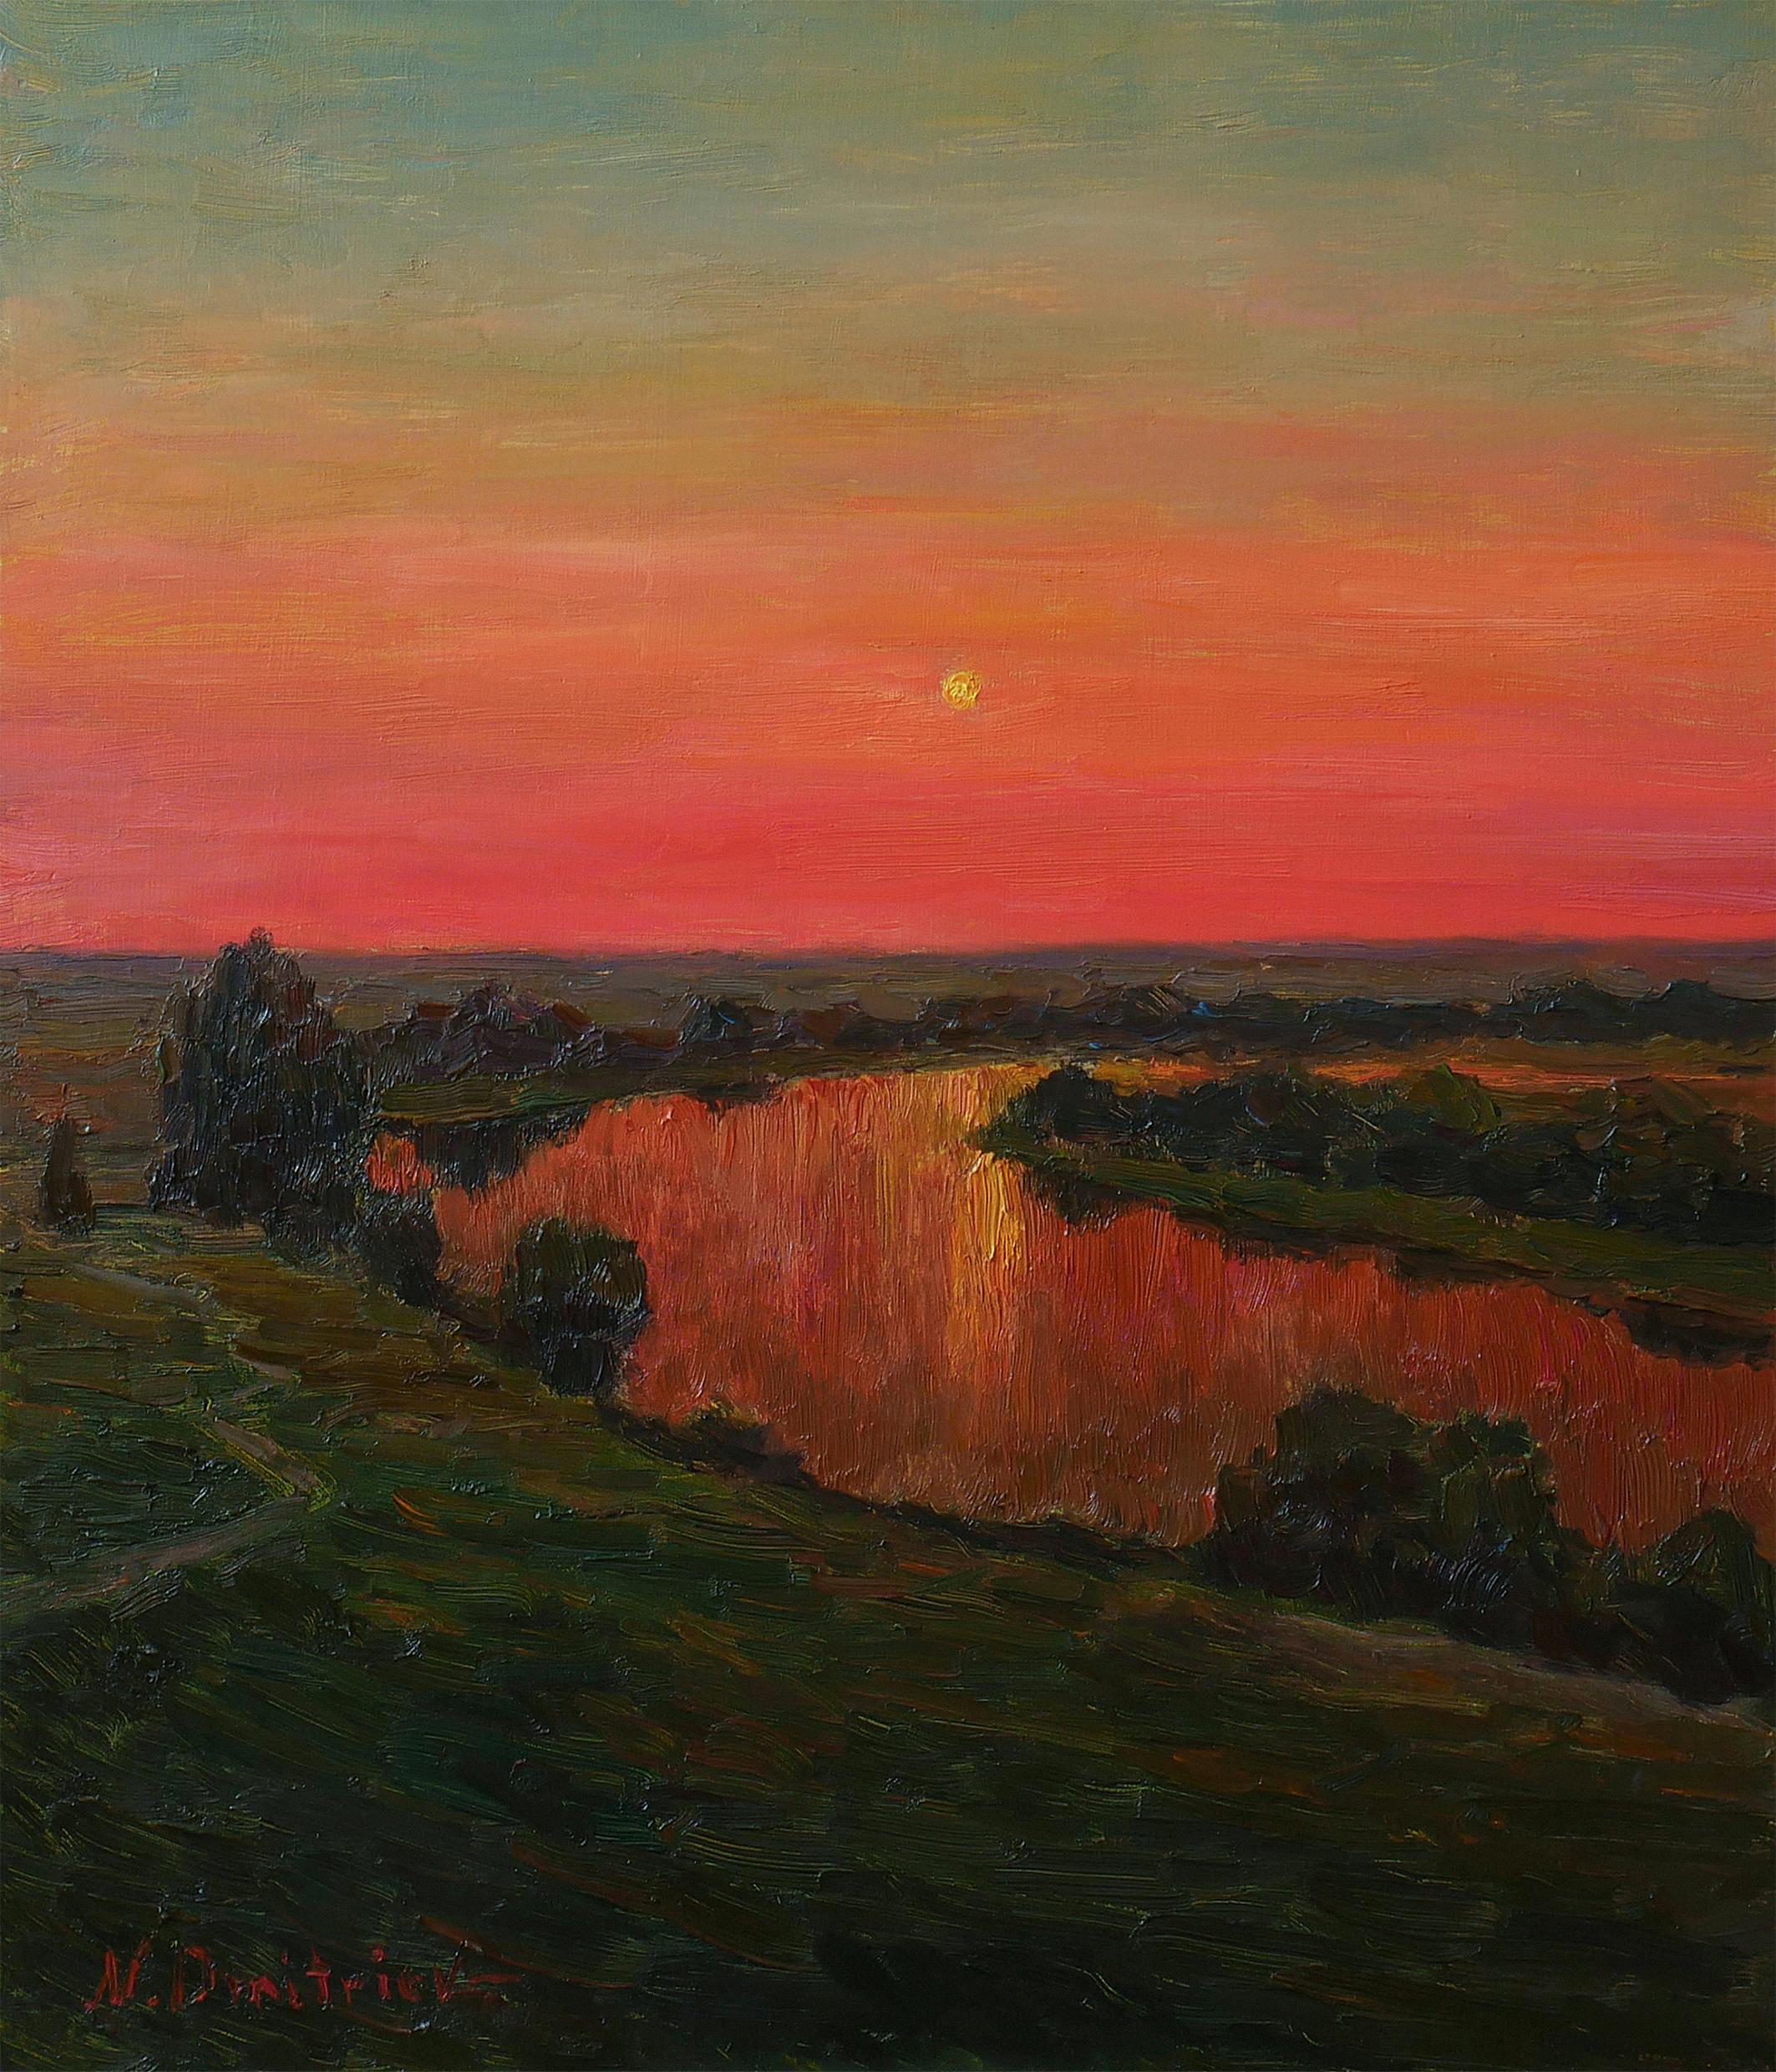 Nikolay Dmitriev Landscape Painting - The Setting Sun - sunset painting